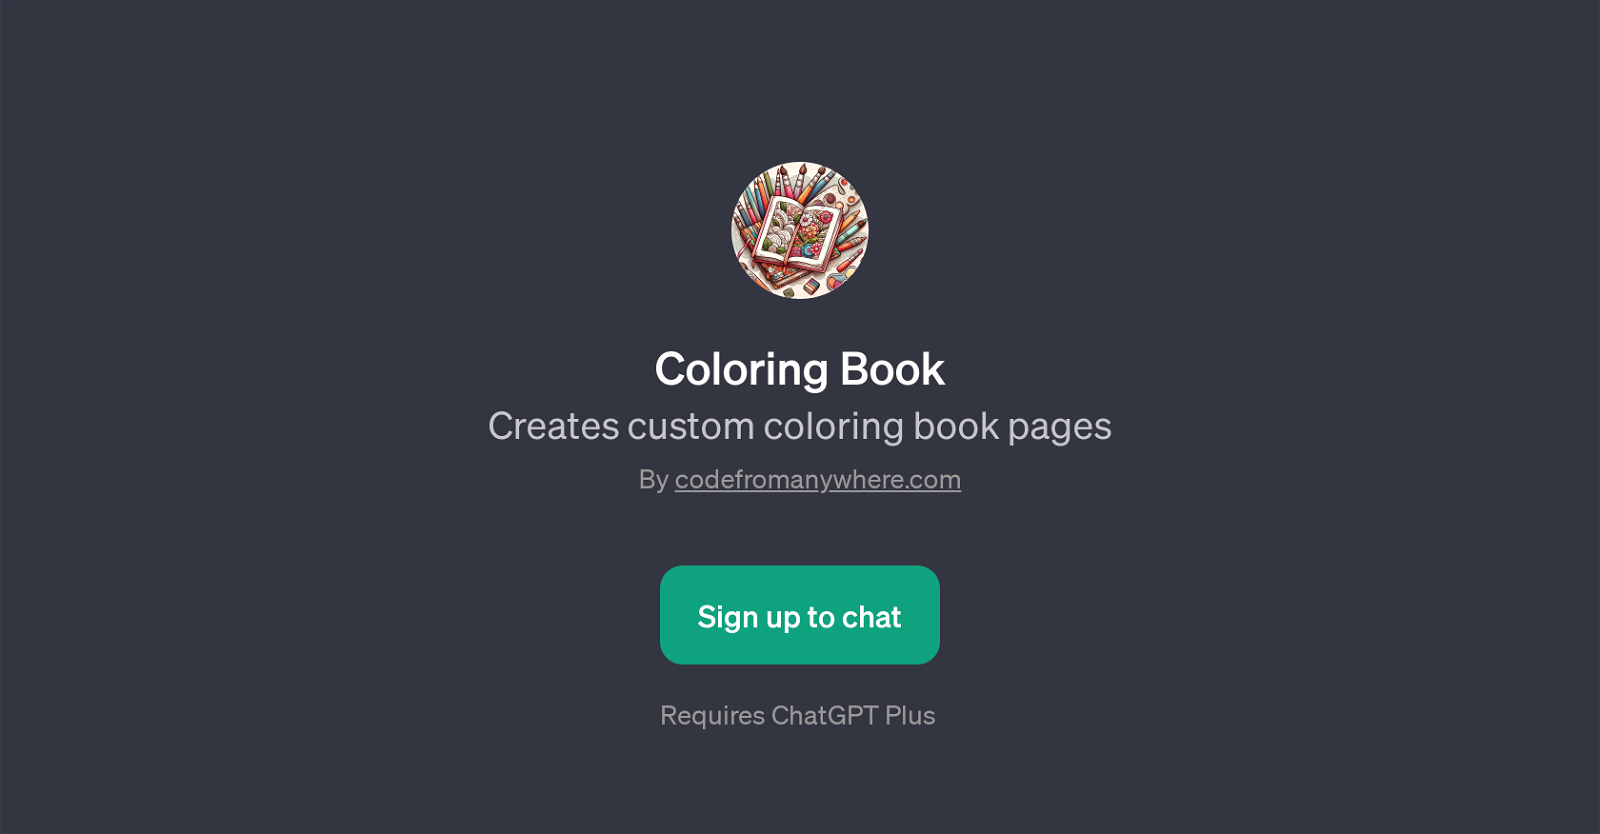 Coloring Book website